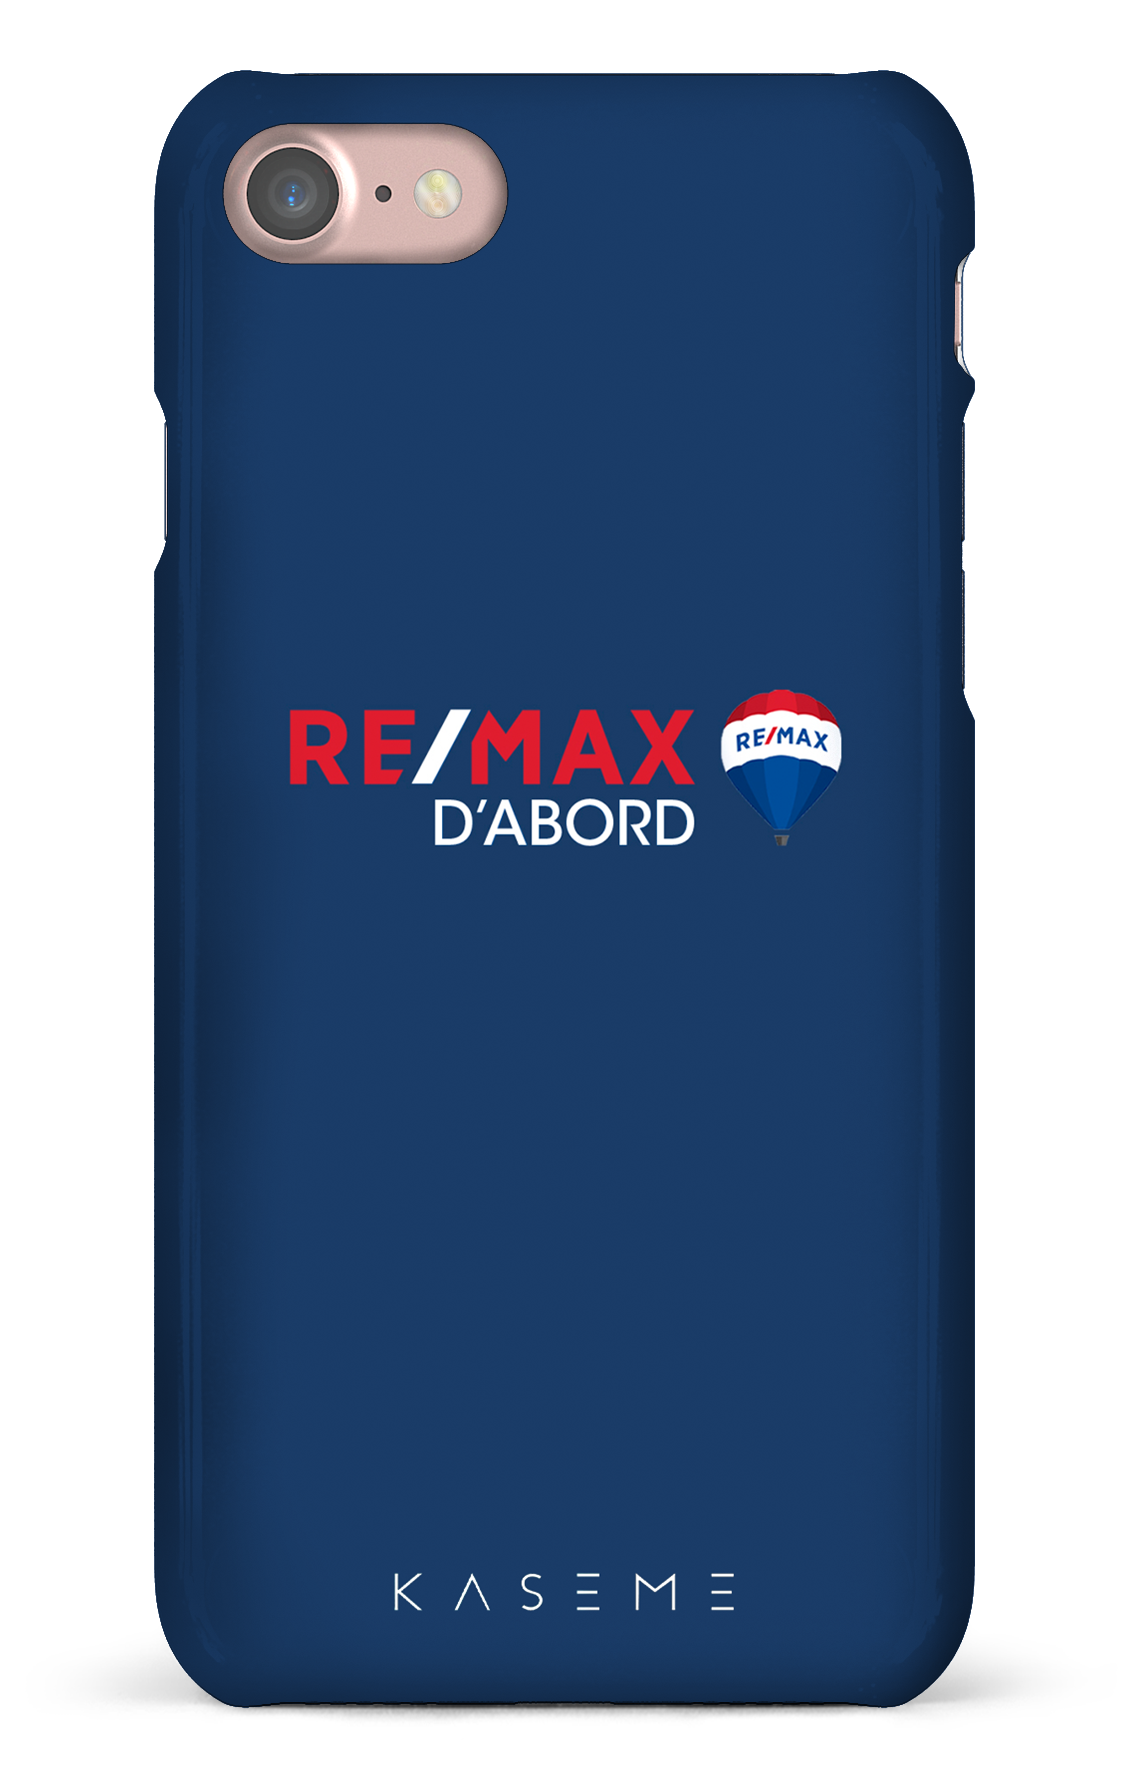 Remax D'abord Bleu - iPhone 7